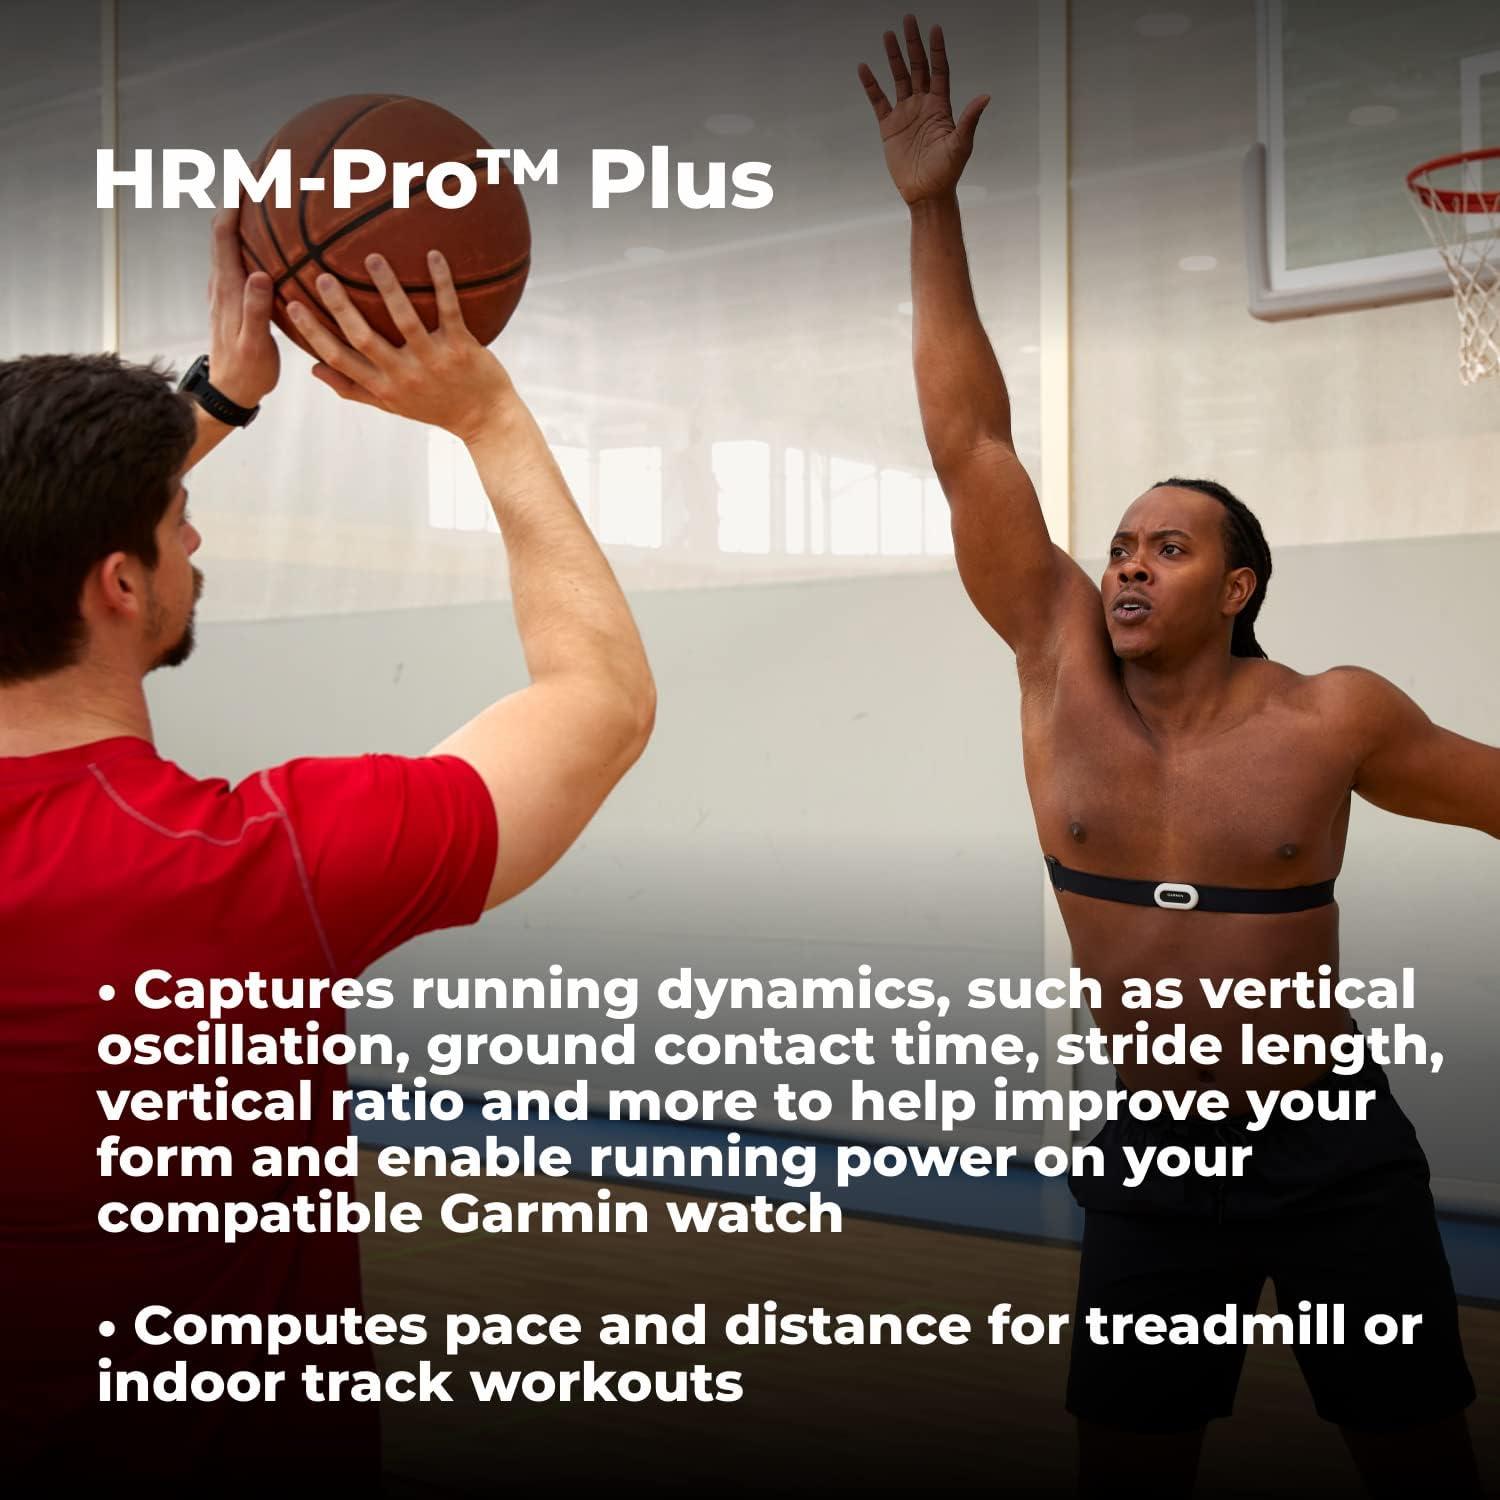 Garmin HRM-Pro Plus, Premium Chest Strap Heart Rate Monitor, Captures